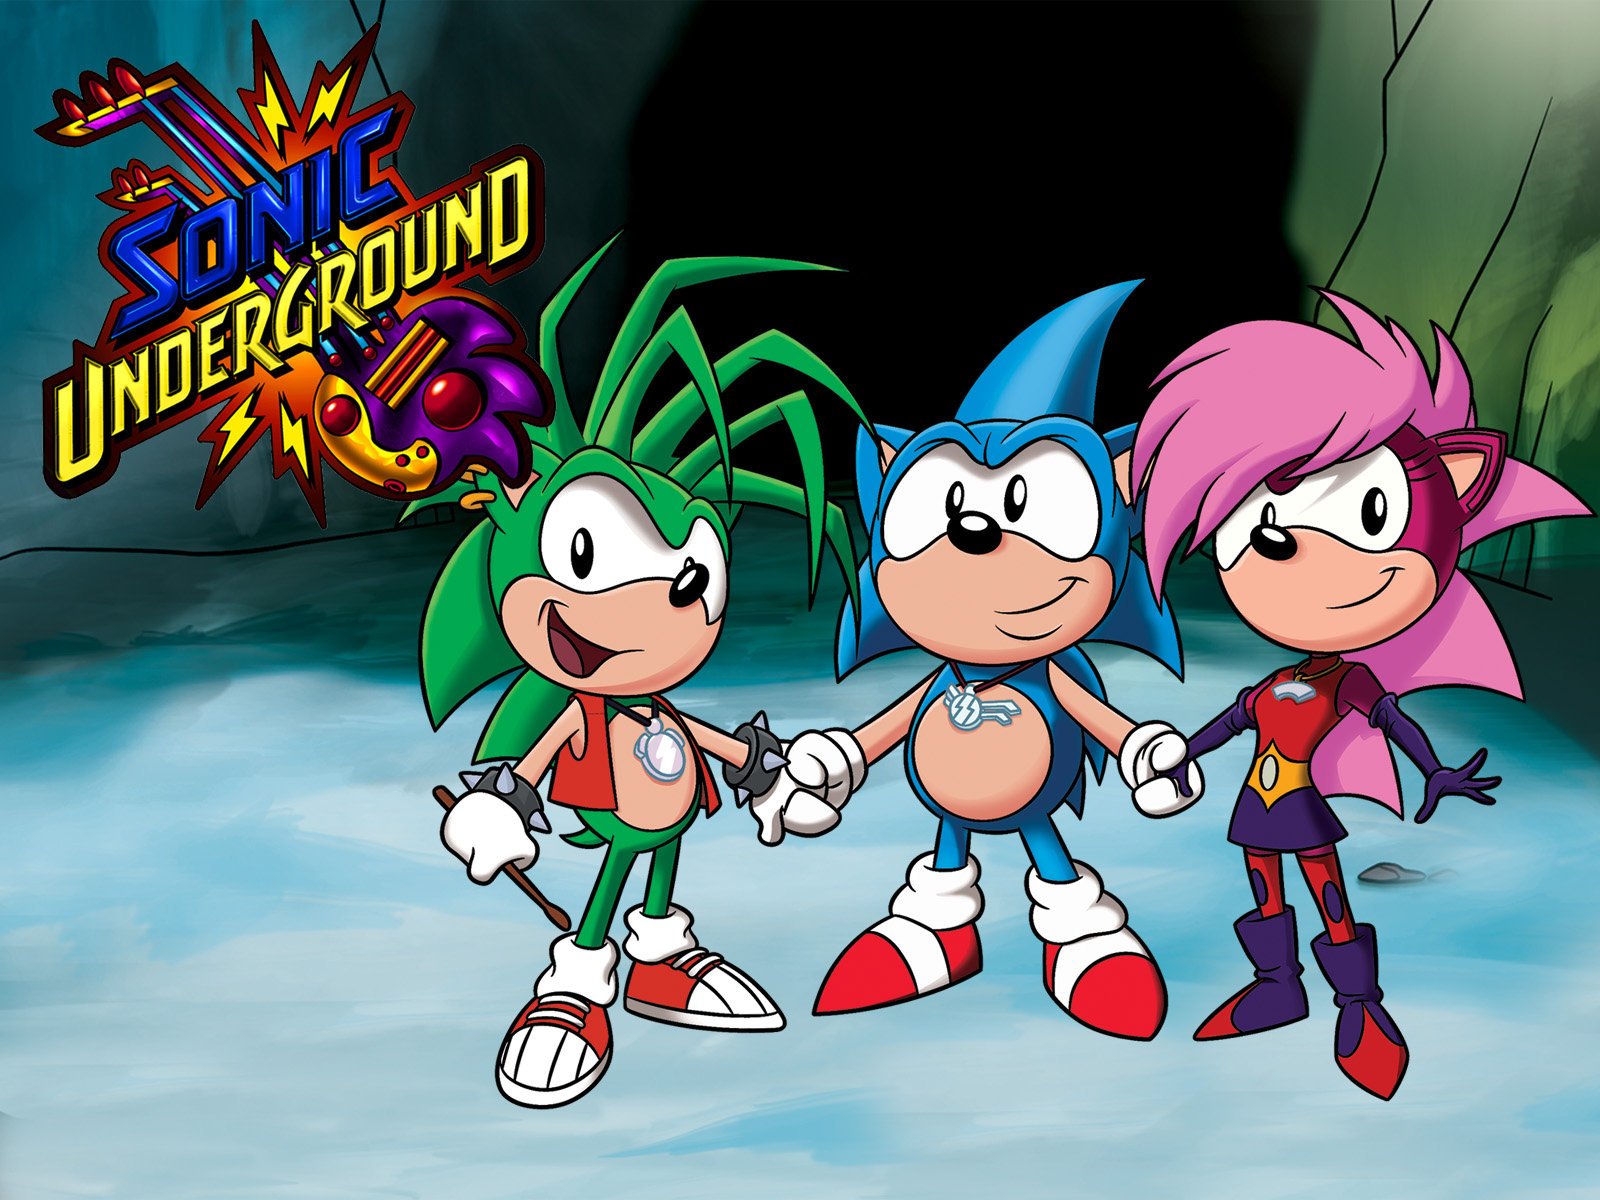 Sonic underground characters